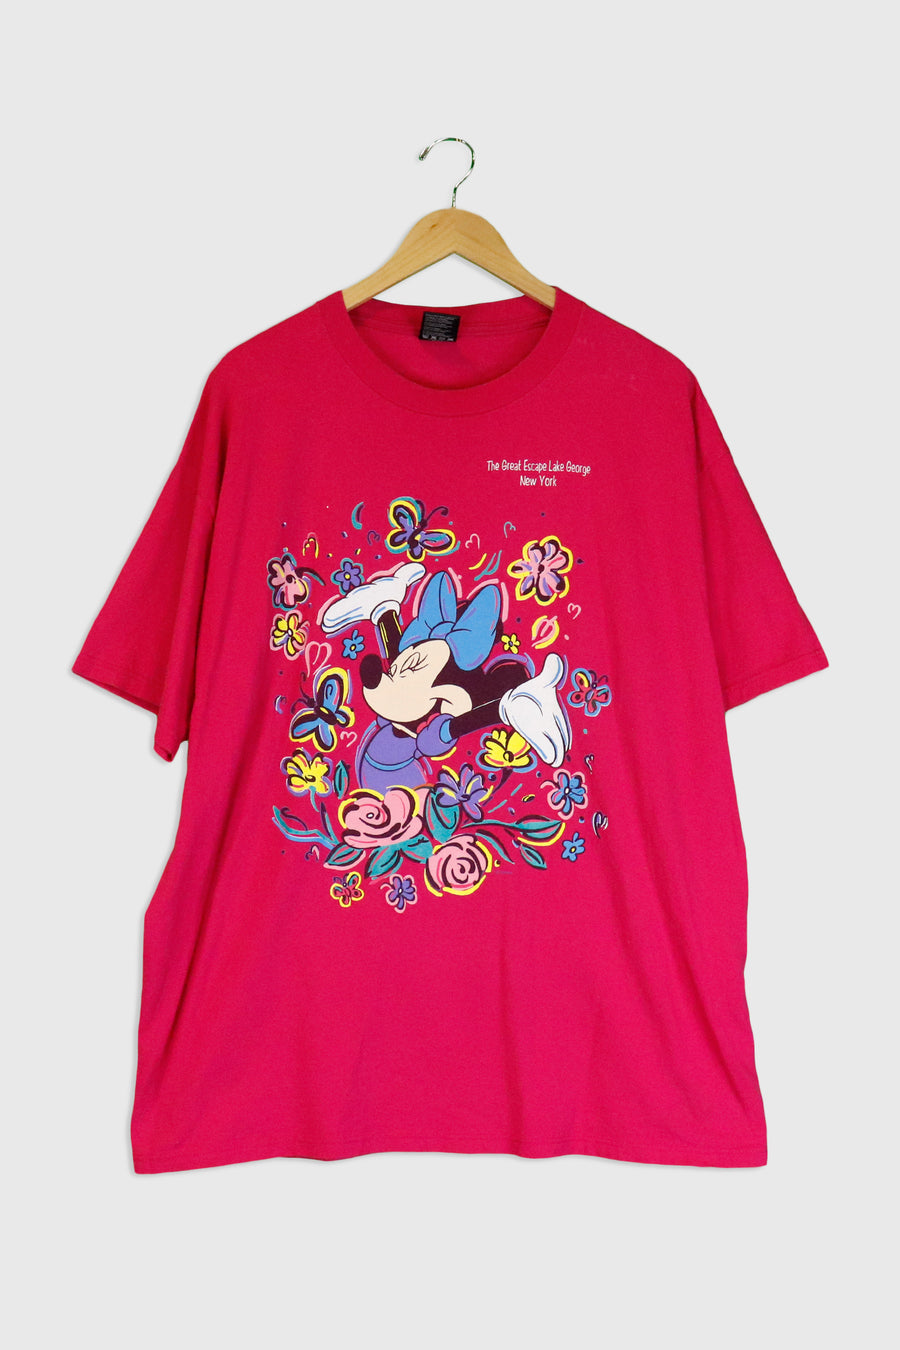 Vintage Minnie Mouse 'Lake George' New York T Shirt Sz XL